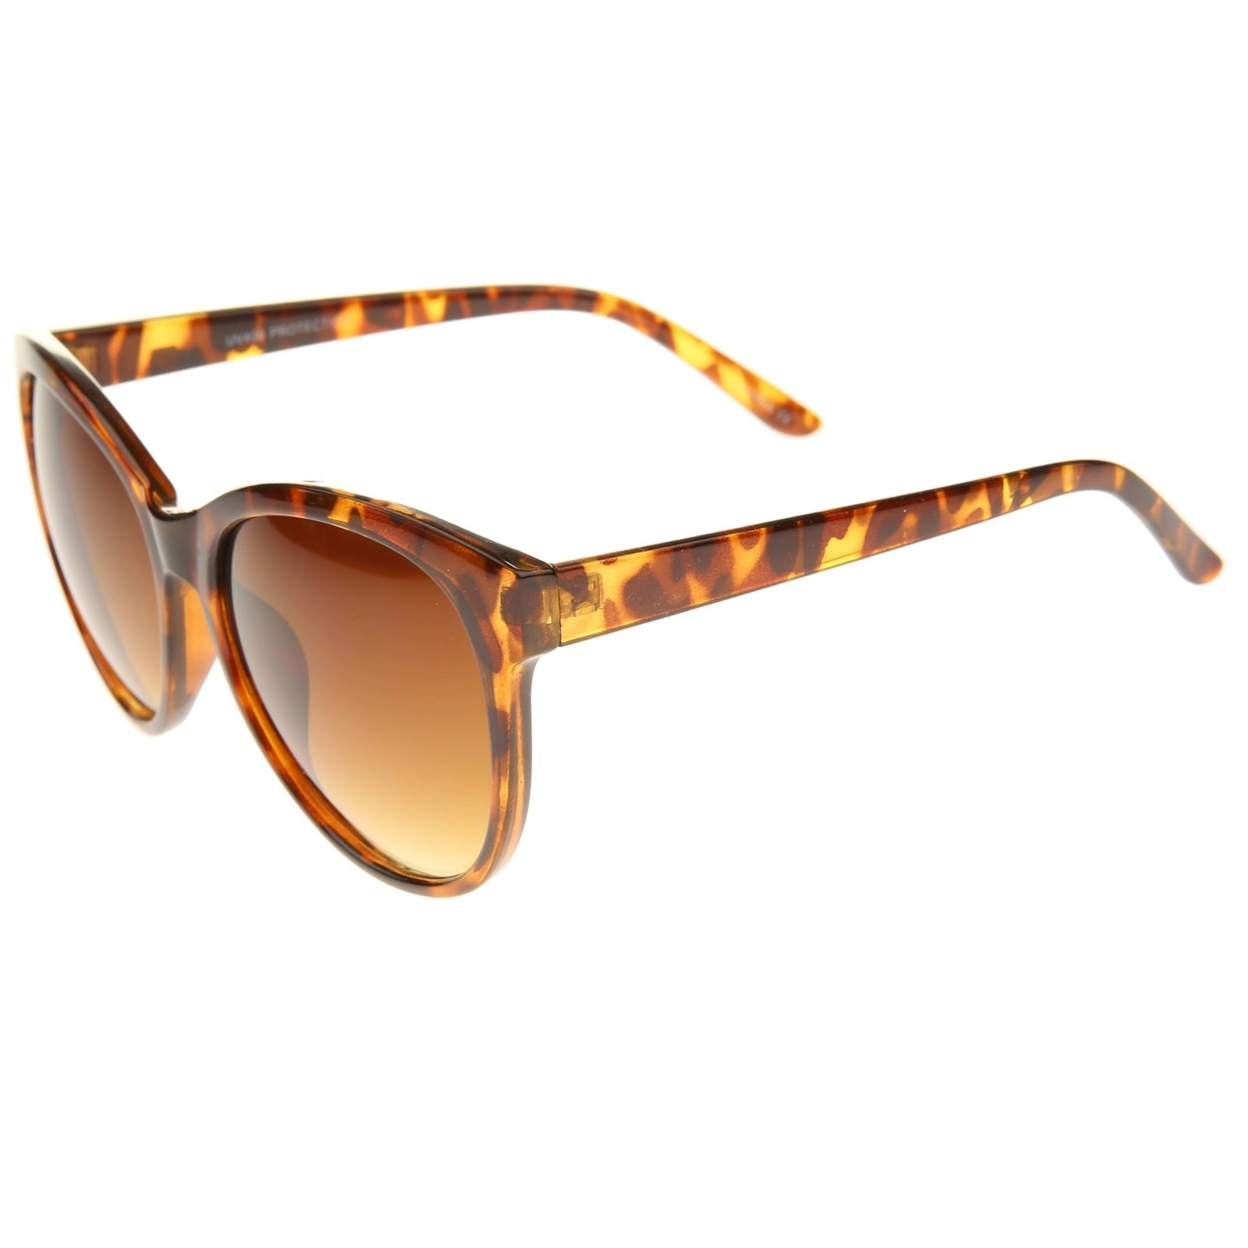 Women's Fashion Horn Rimmed Oversized Cat Eye Sunglasses 58mm - Creme / Brown